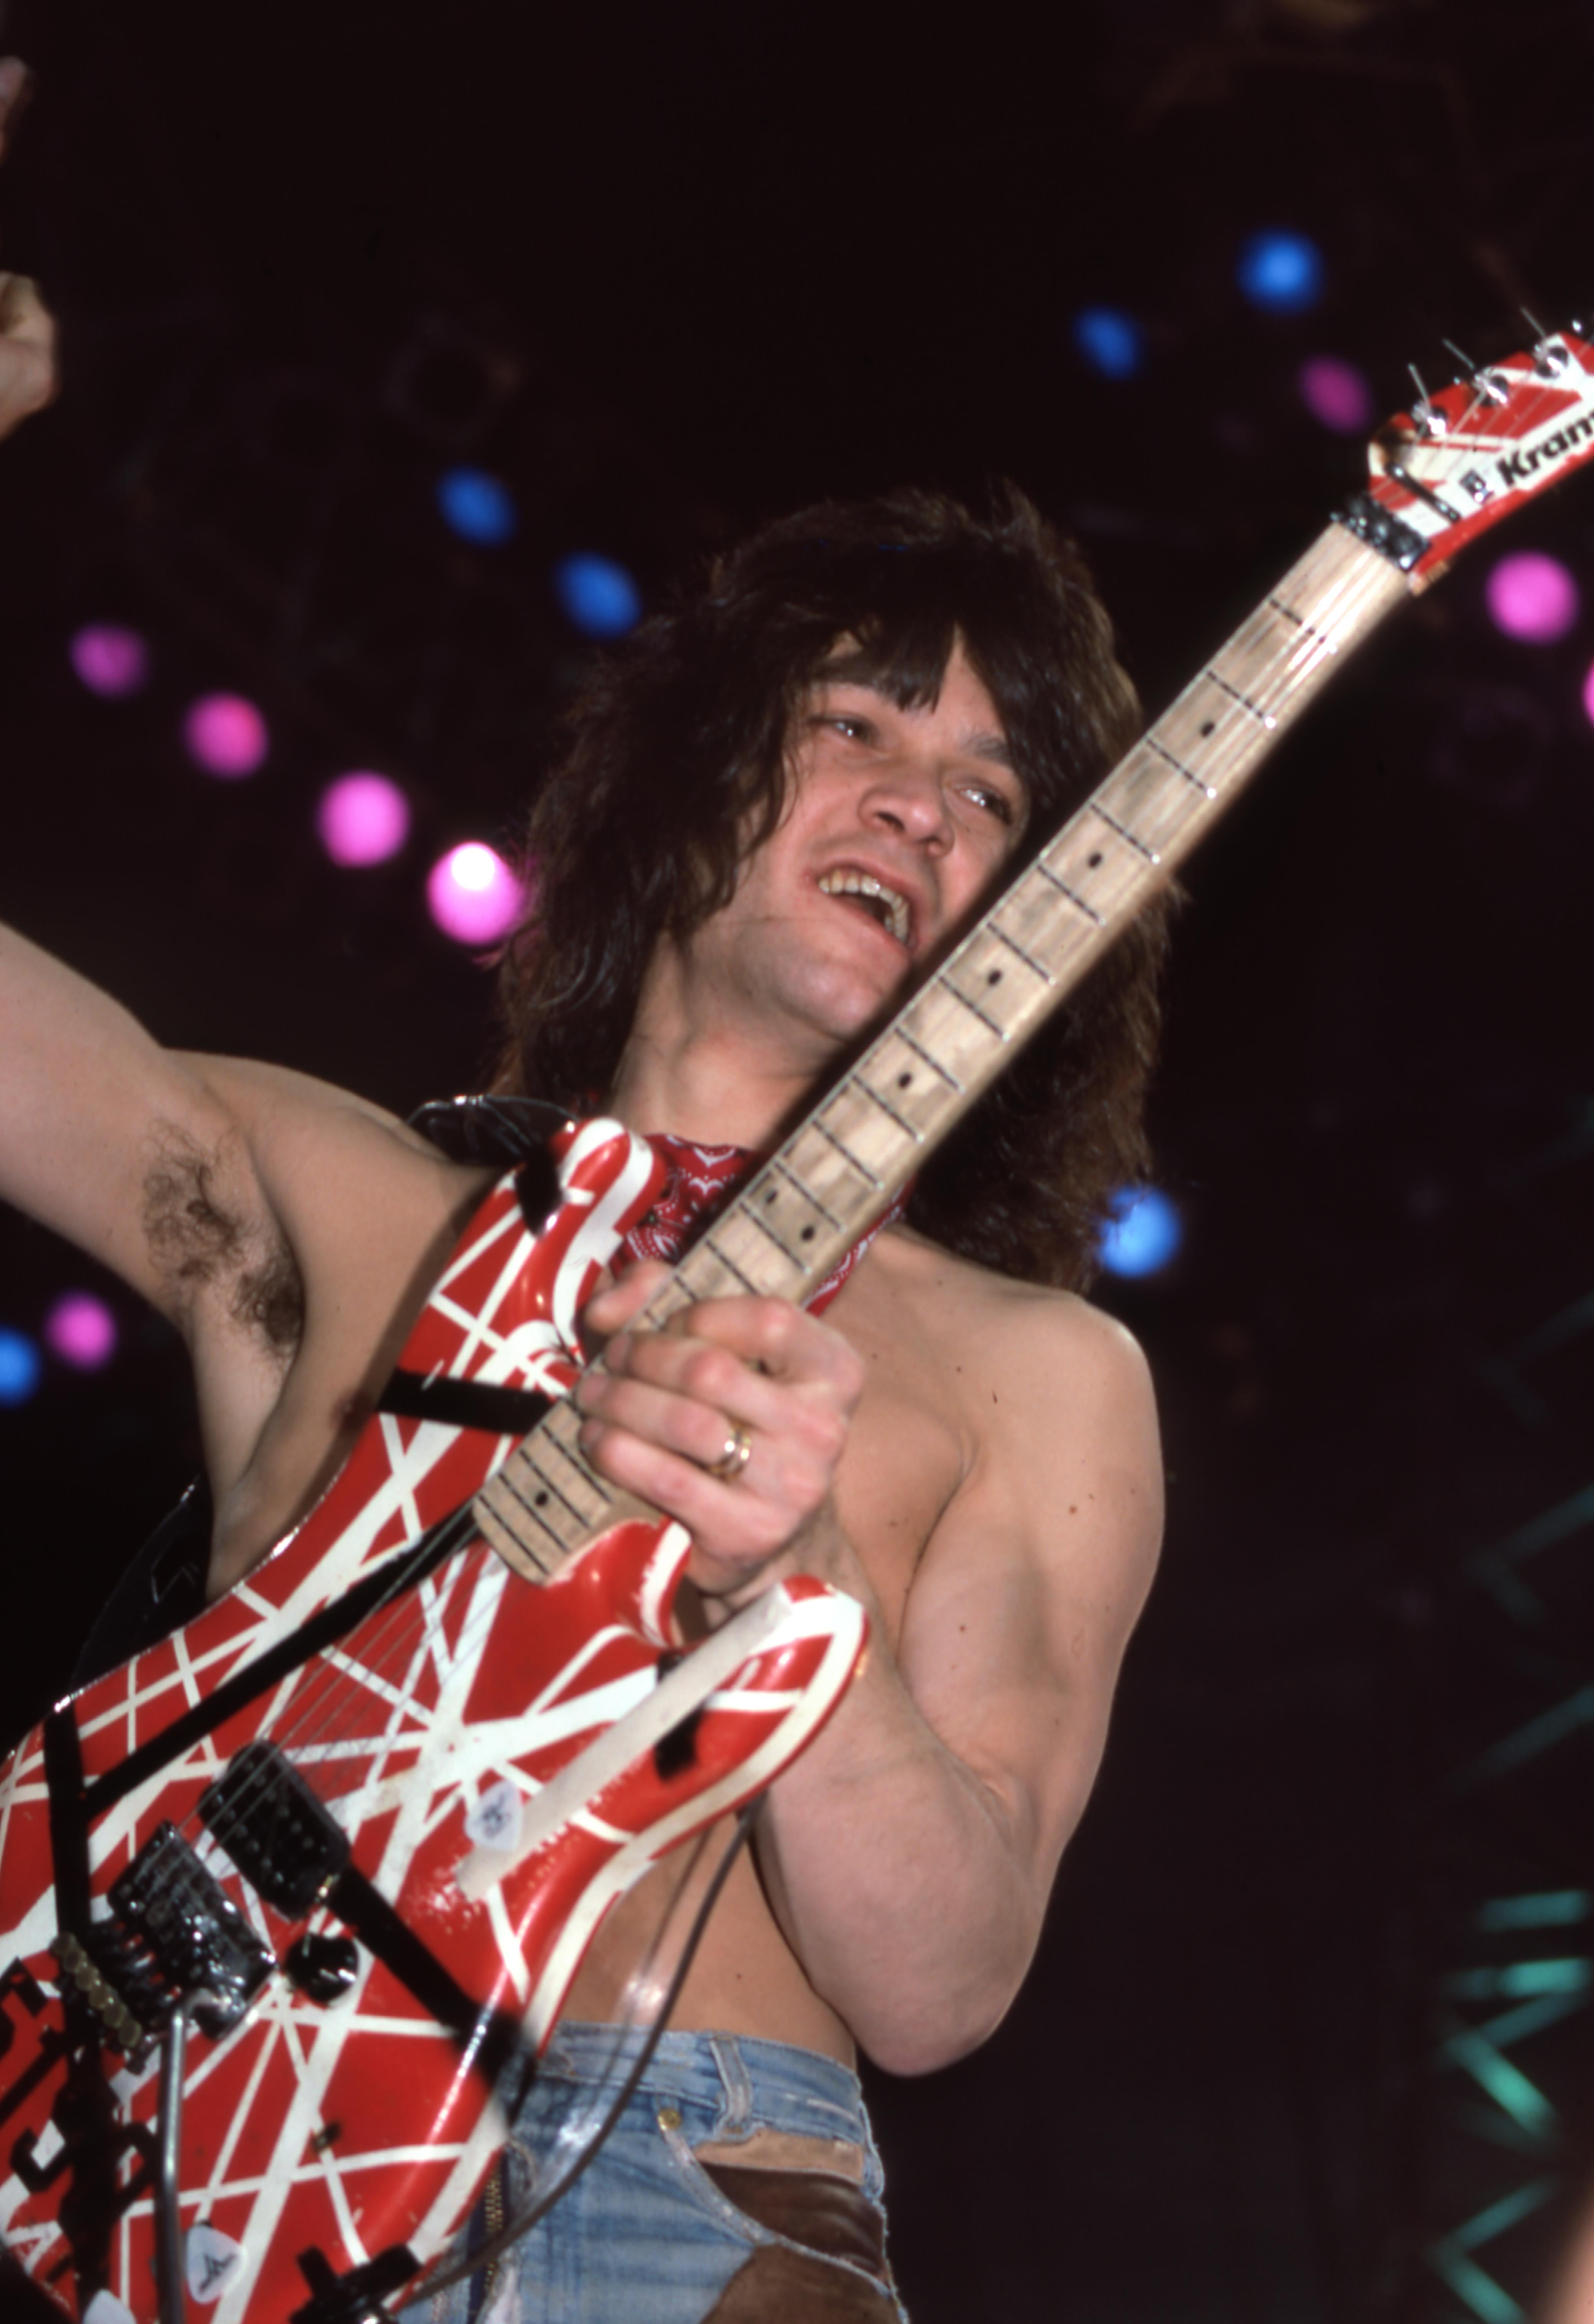 Tony Defilippis Portrait Photograph - Eddie Van Halen Smiling on Stage Fine Art Print